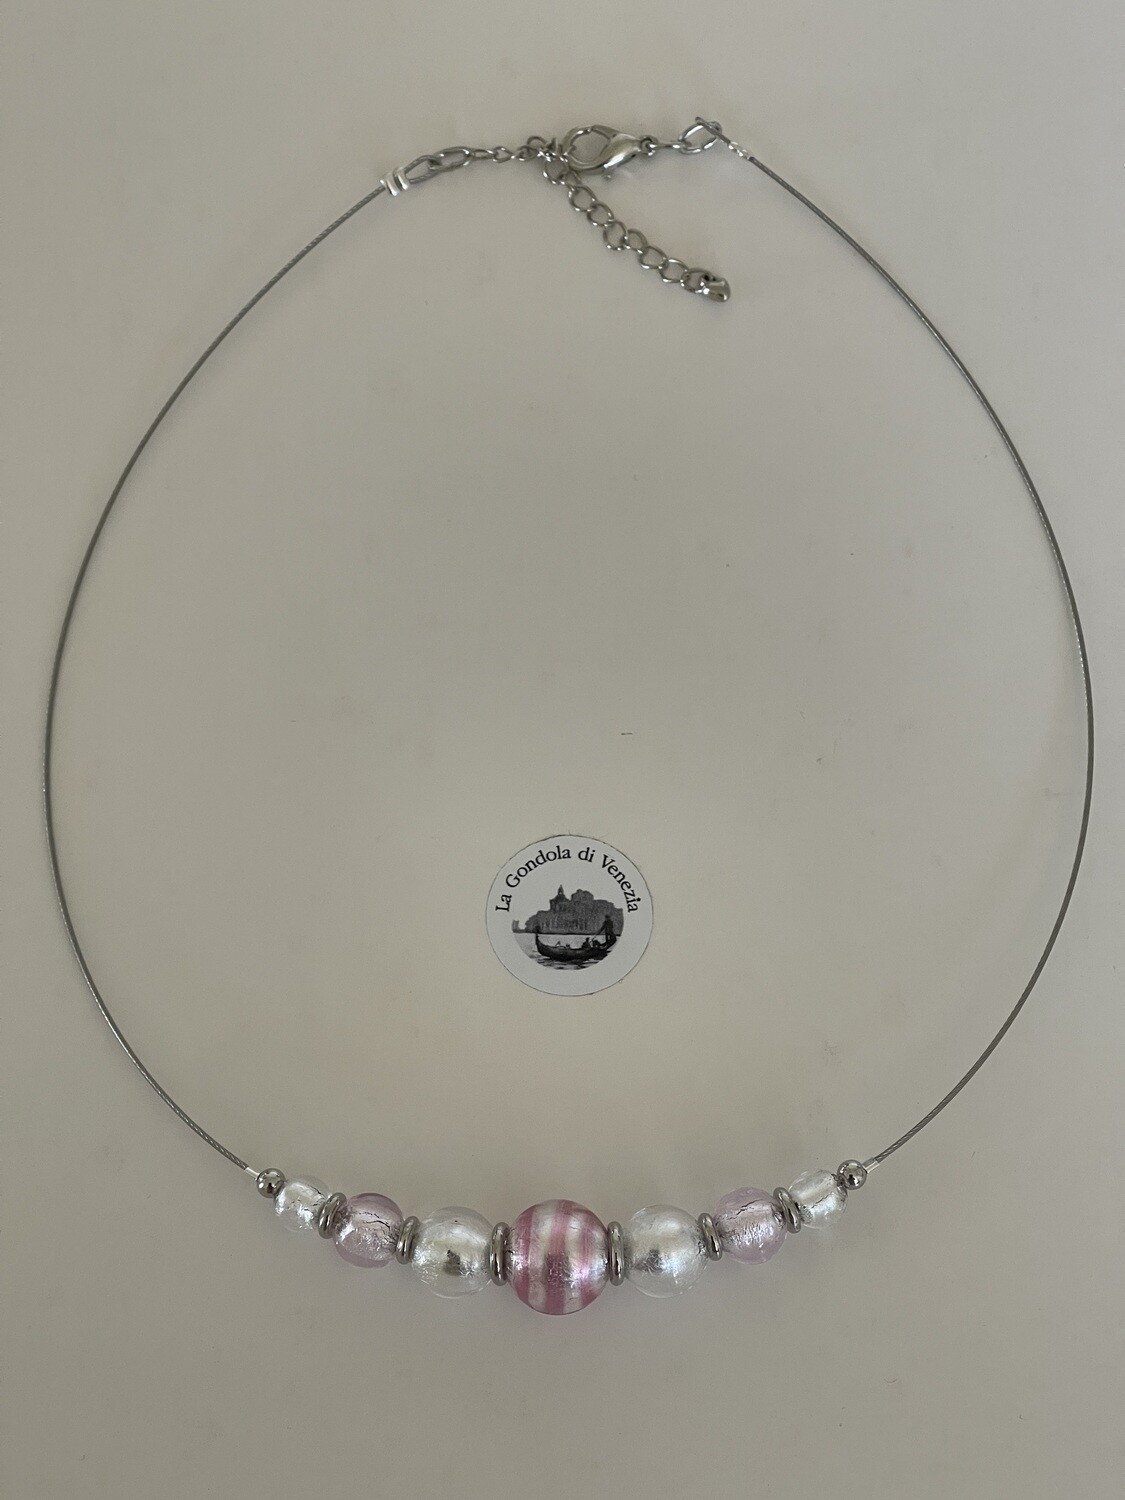 Necklace GdV Murano ball beads